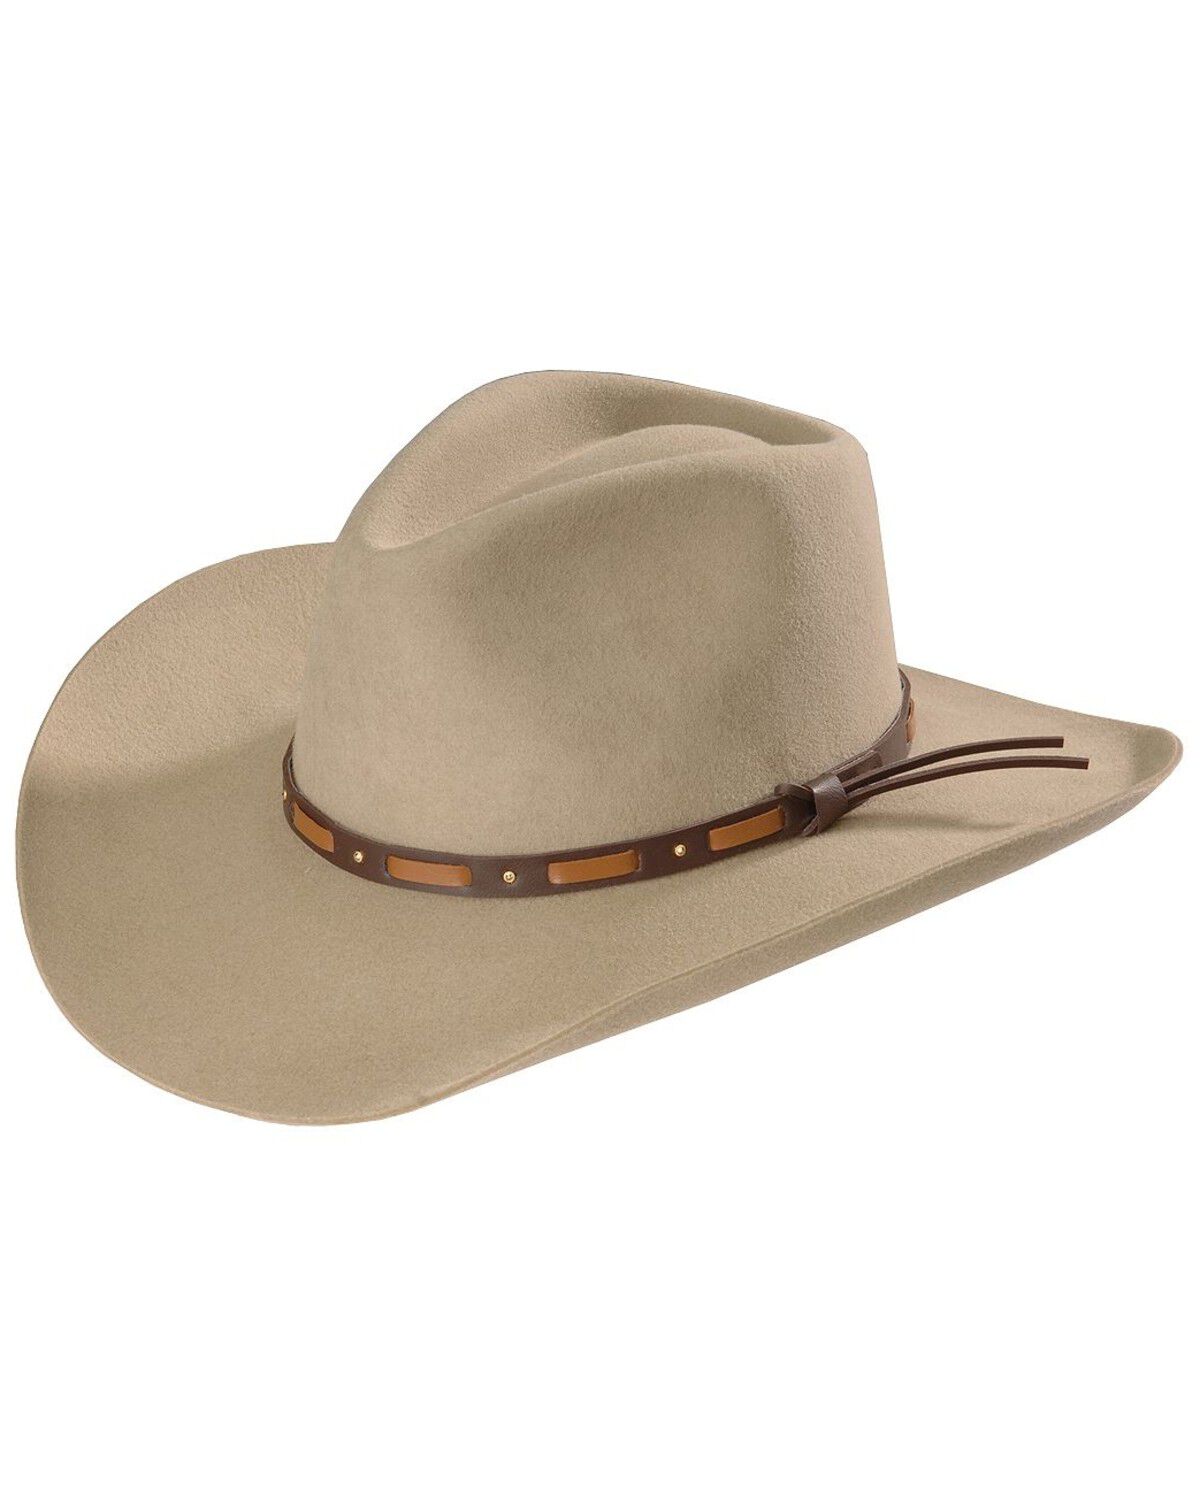 Stetson Cowboy Hat Size Chart